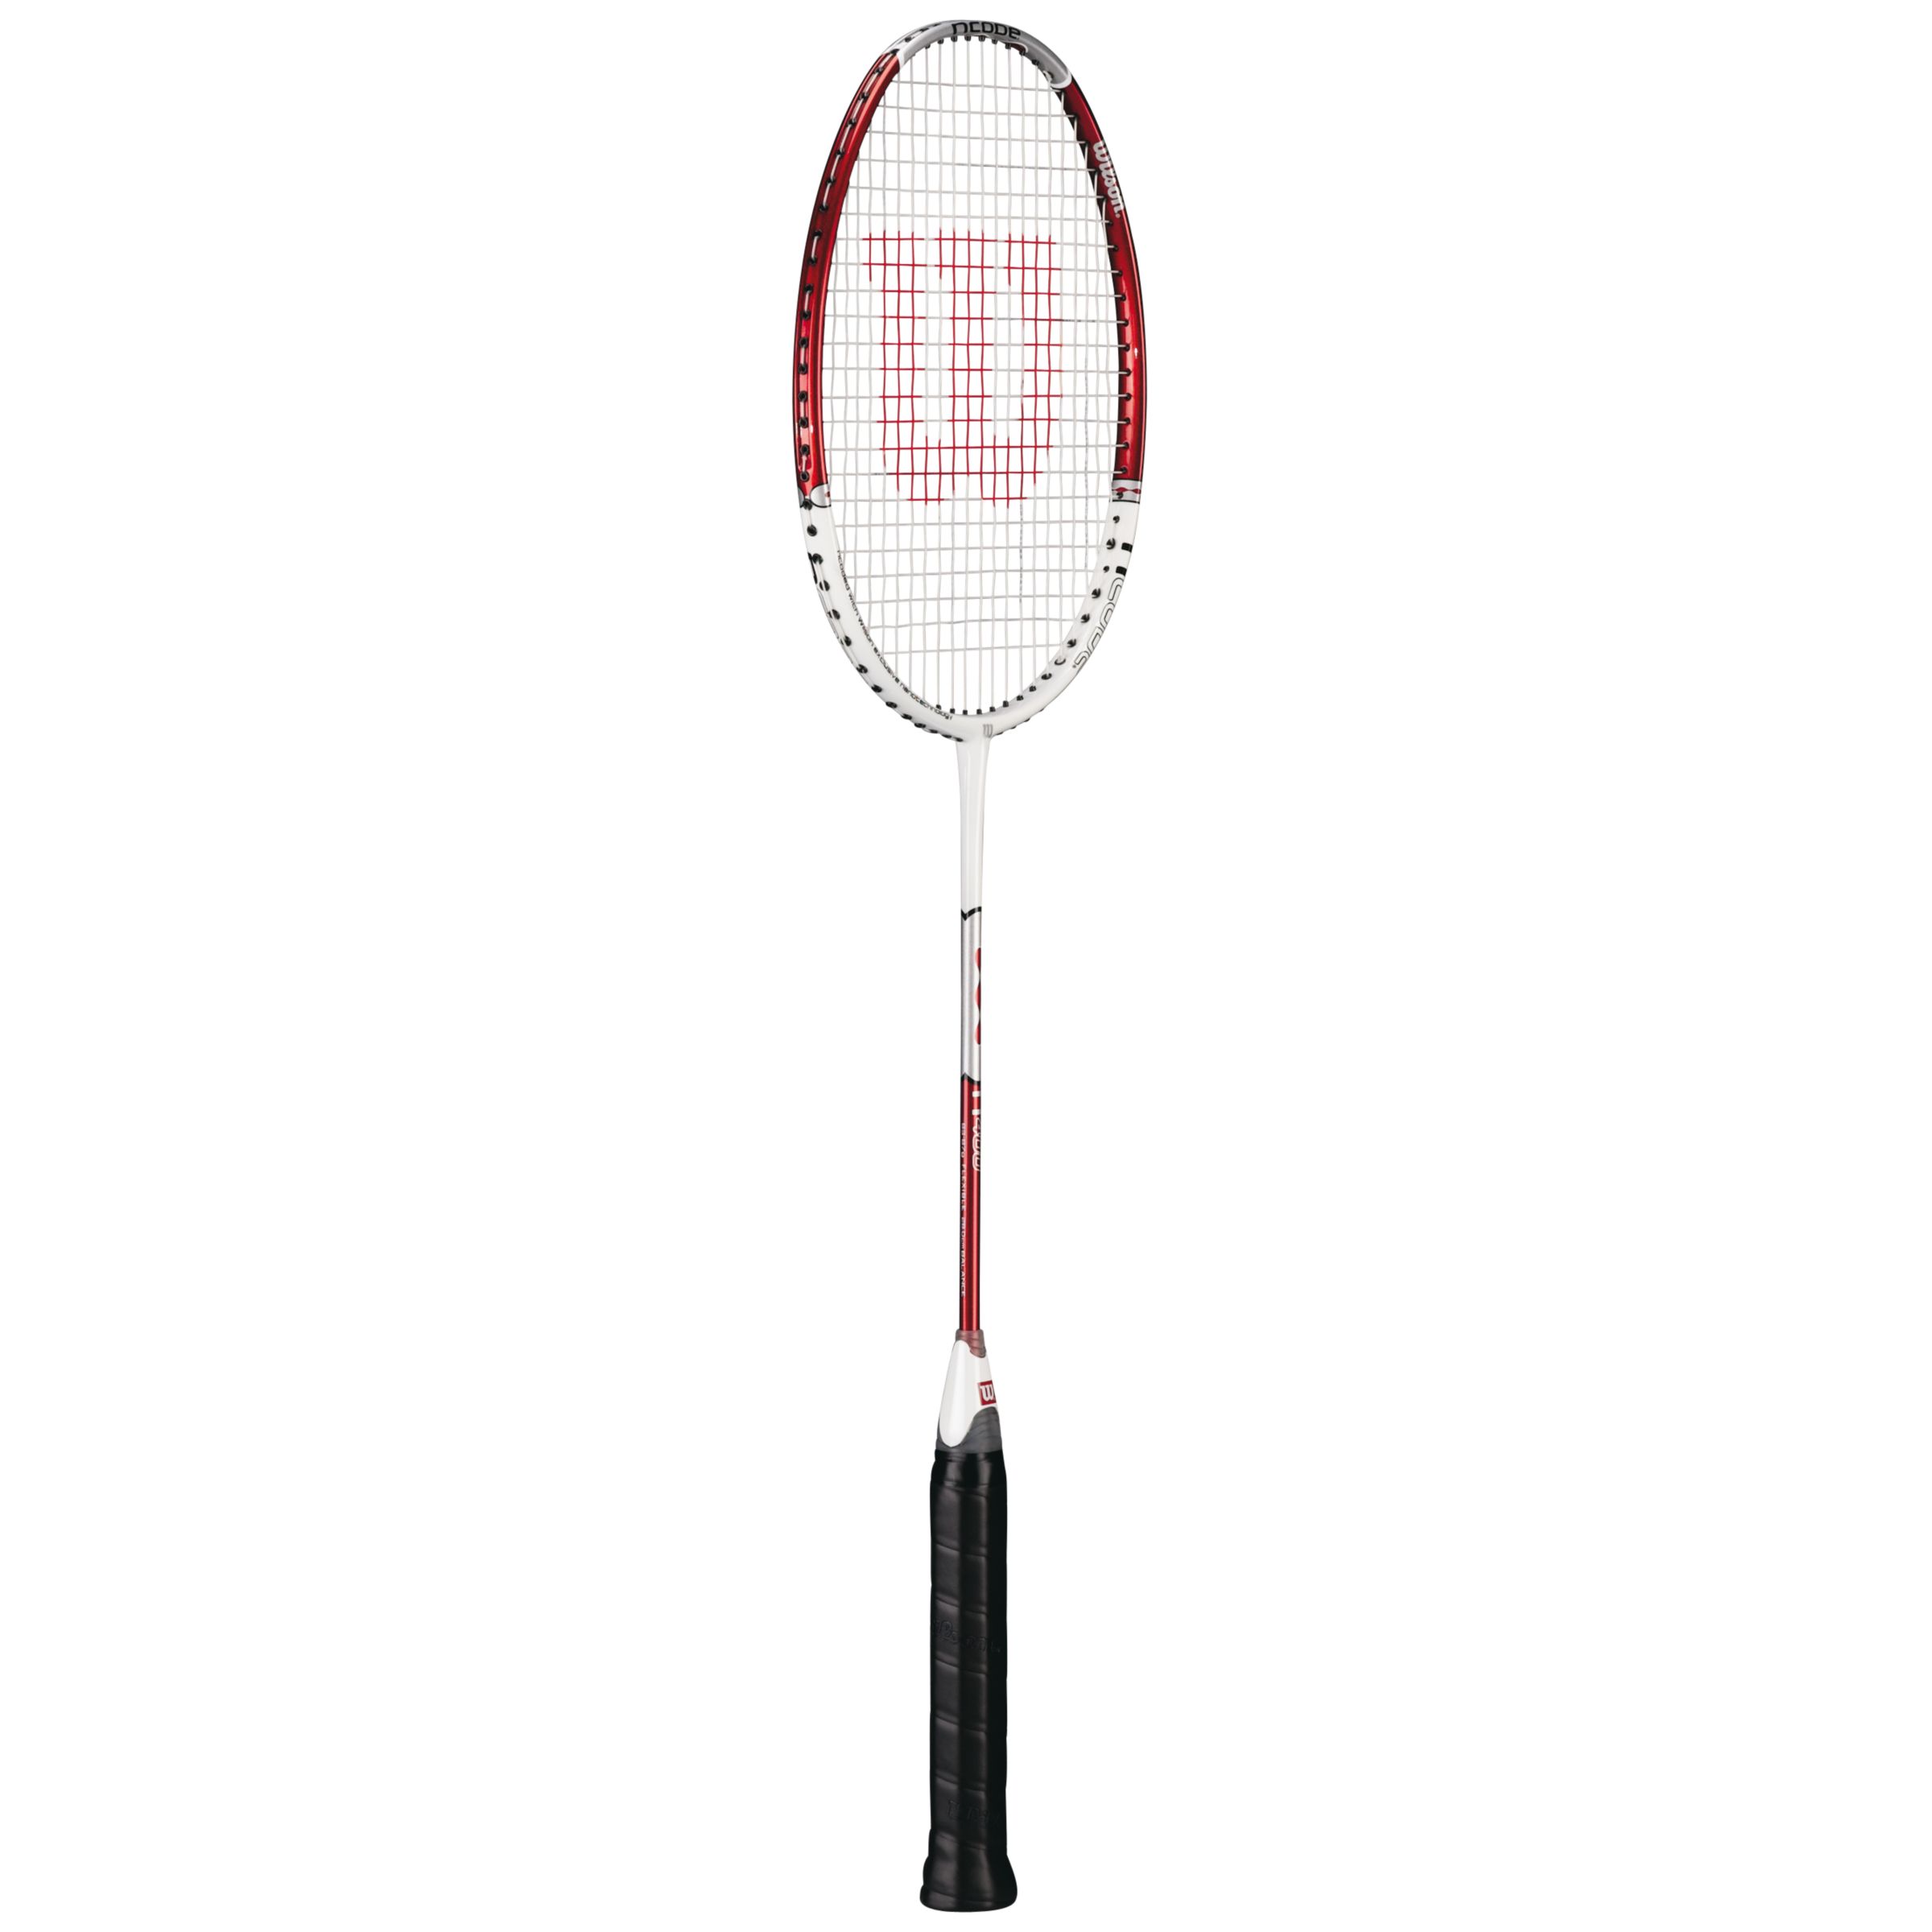 nForce 400 Beginner Badminton Racket